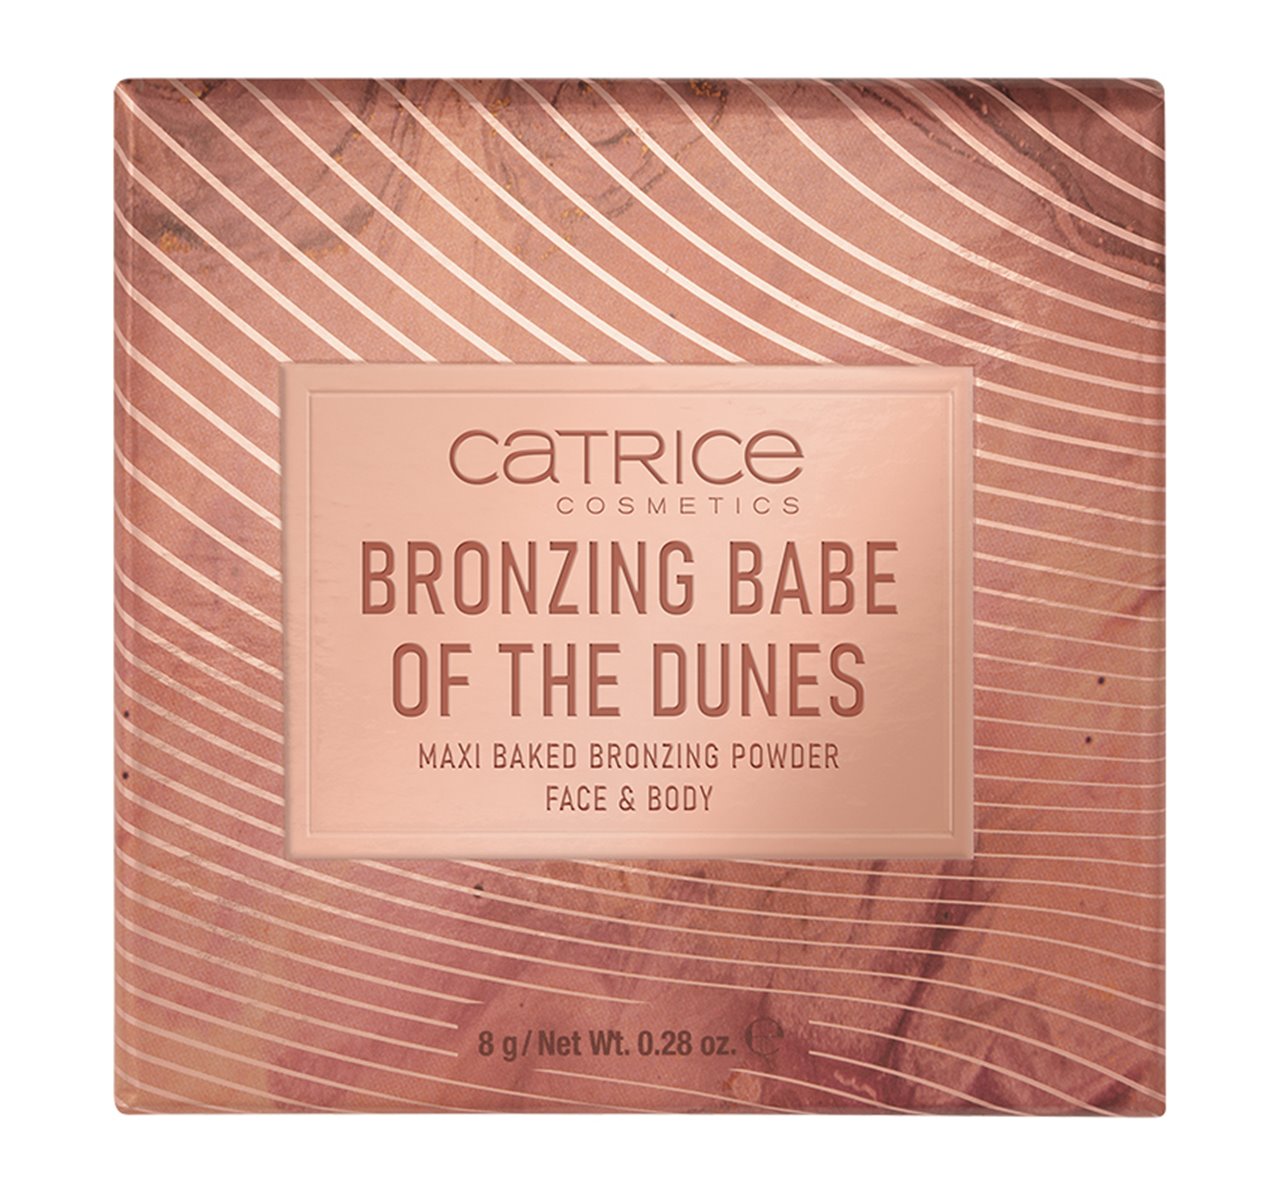 Catrice Bronzing Baked Dunes Maxi Bronzing Babe Of Powder-Face The